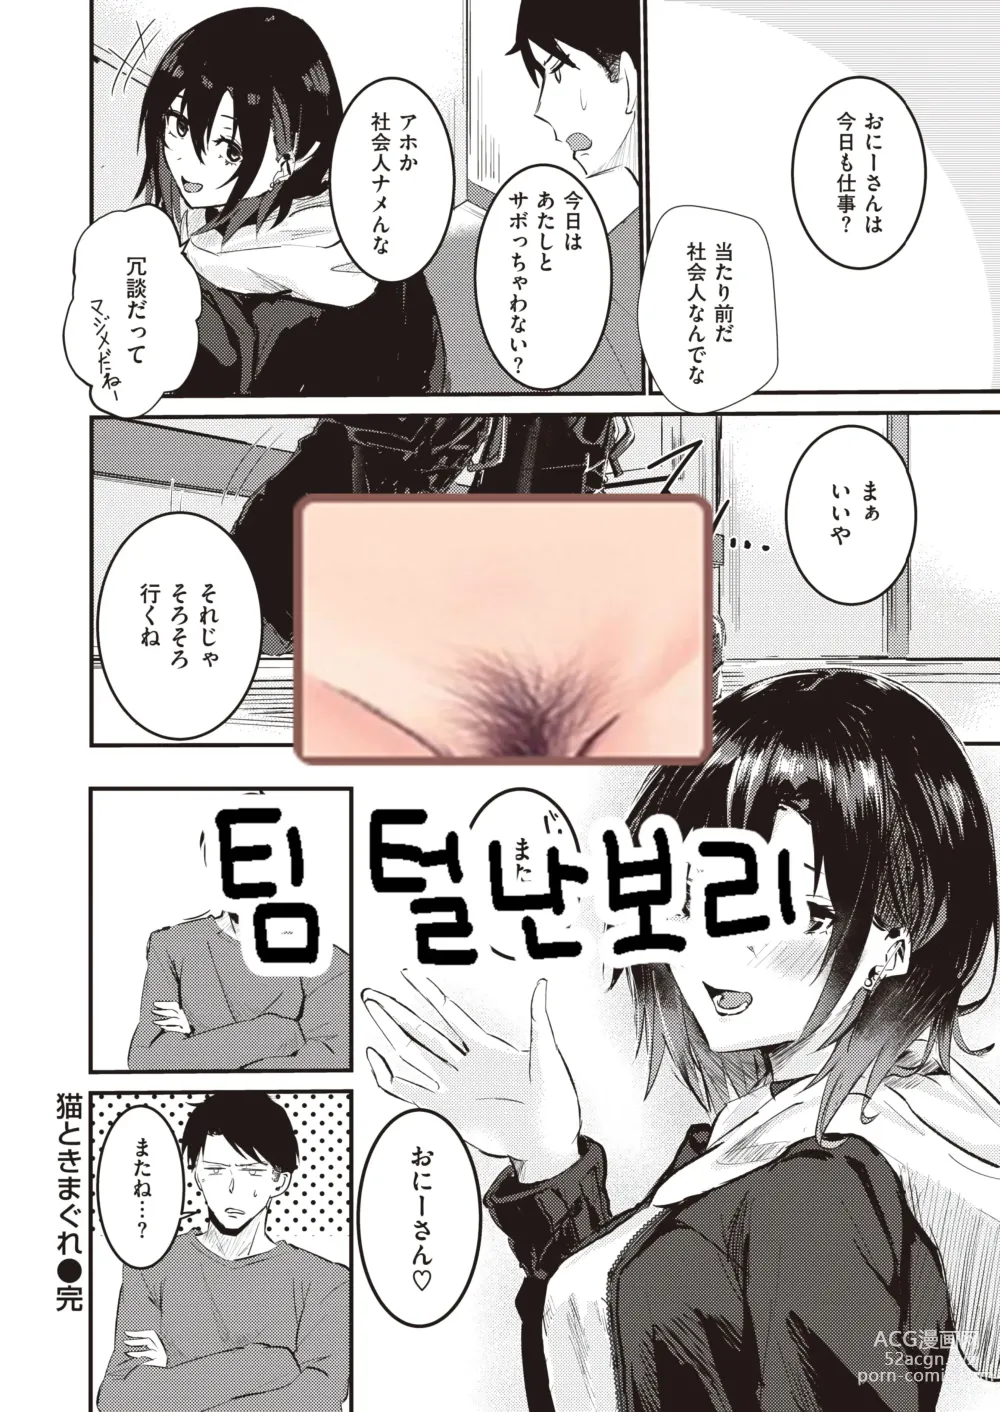 Page 25 of manga Neko to Kimagure